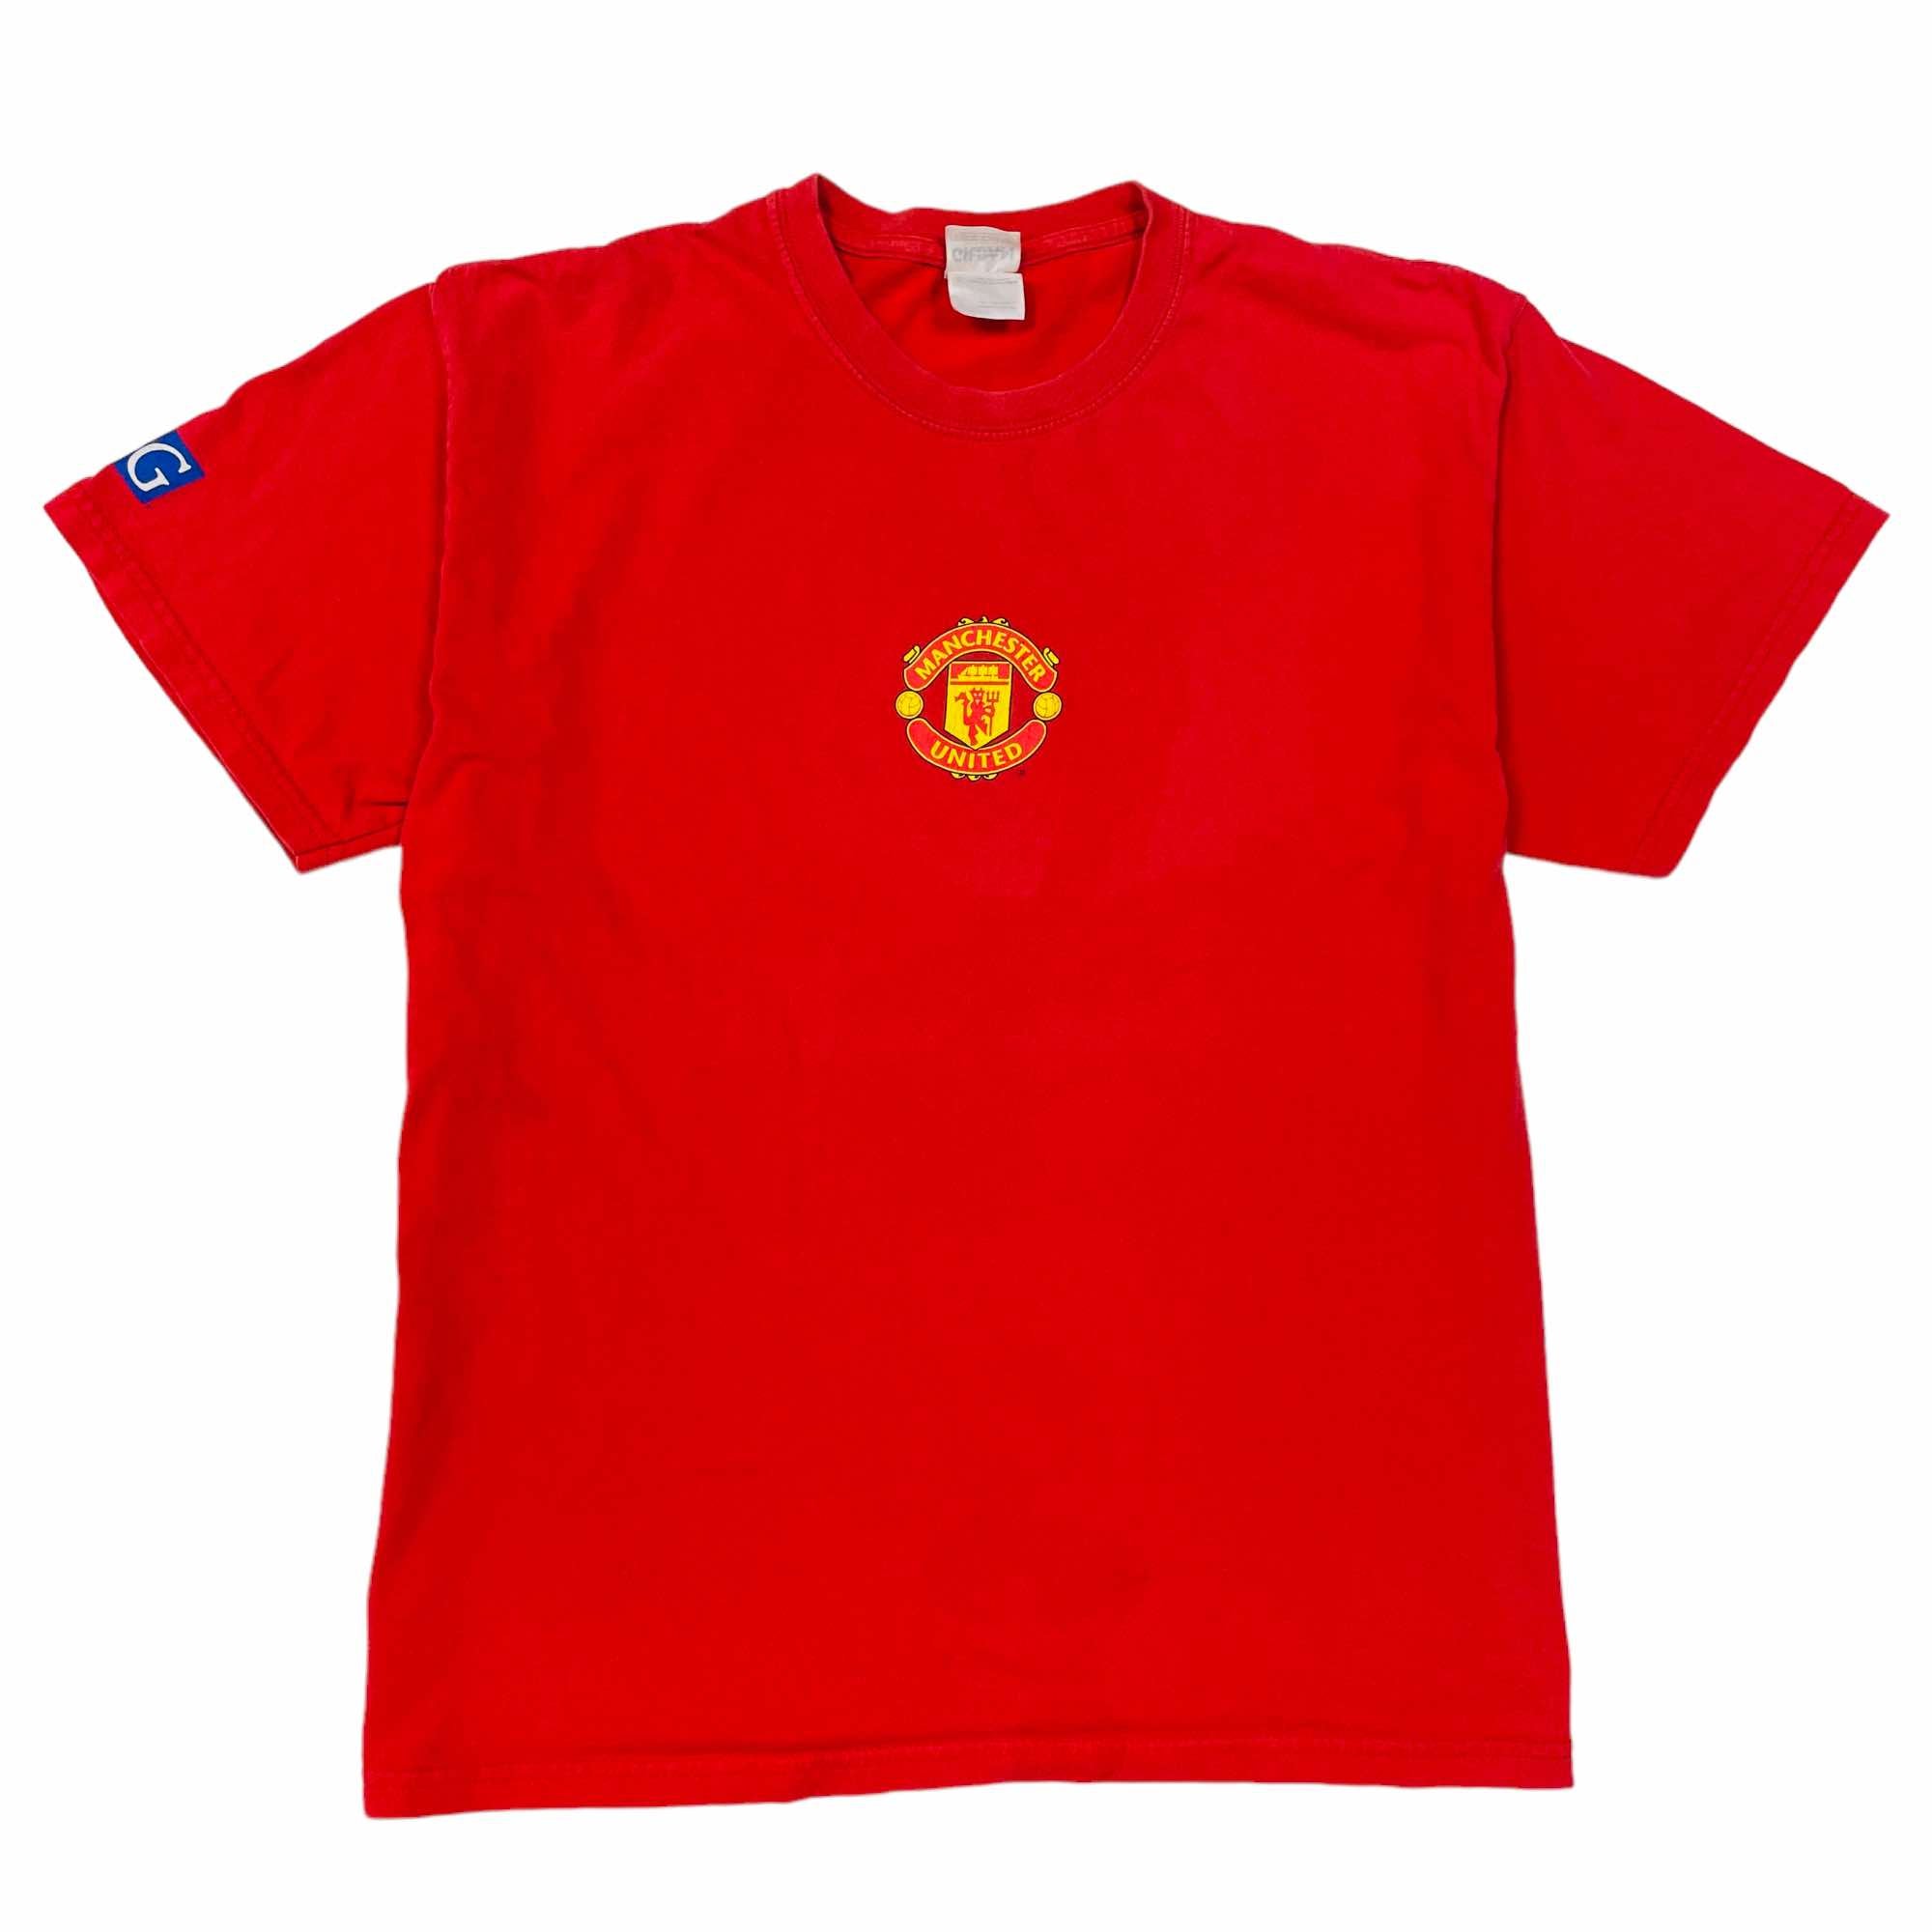 Manchester United T-Shirt - Large